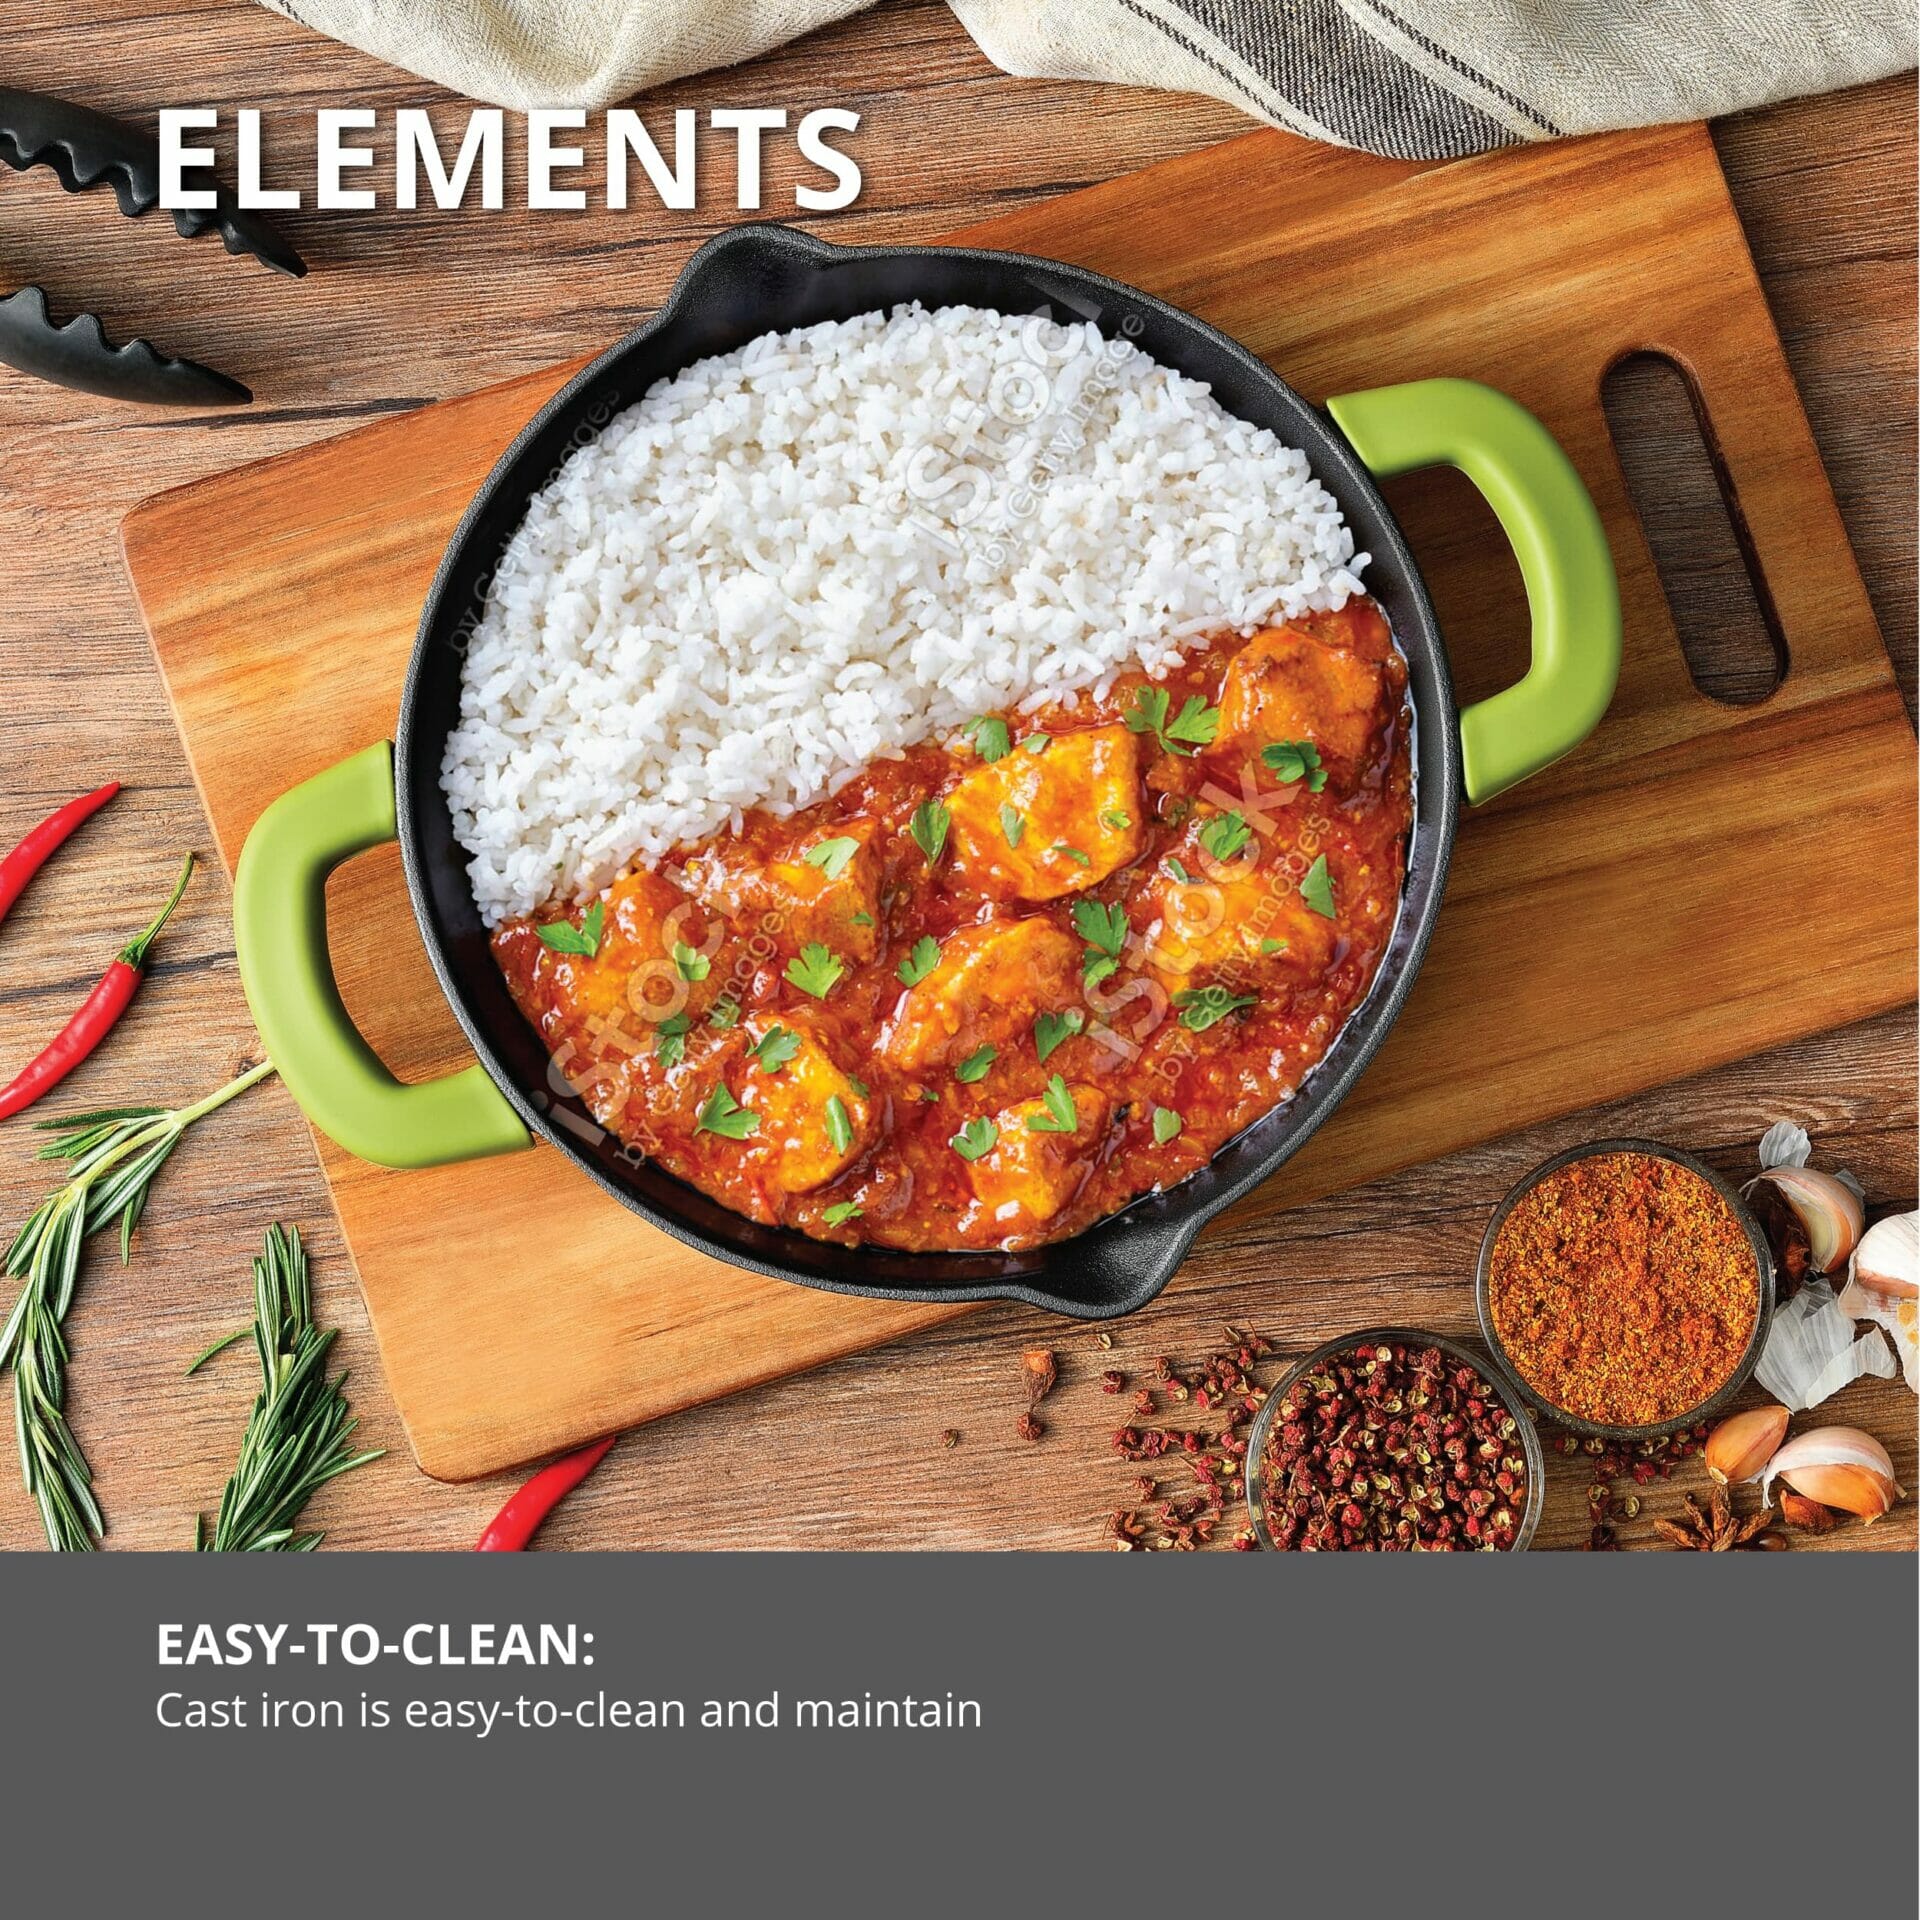 Bergner Elements Pre-Seasoned Olive Gree, 24cm Cast Iron Baking Pan